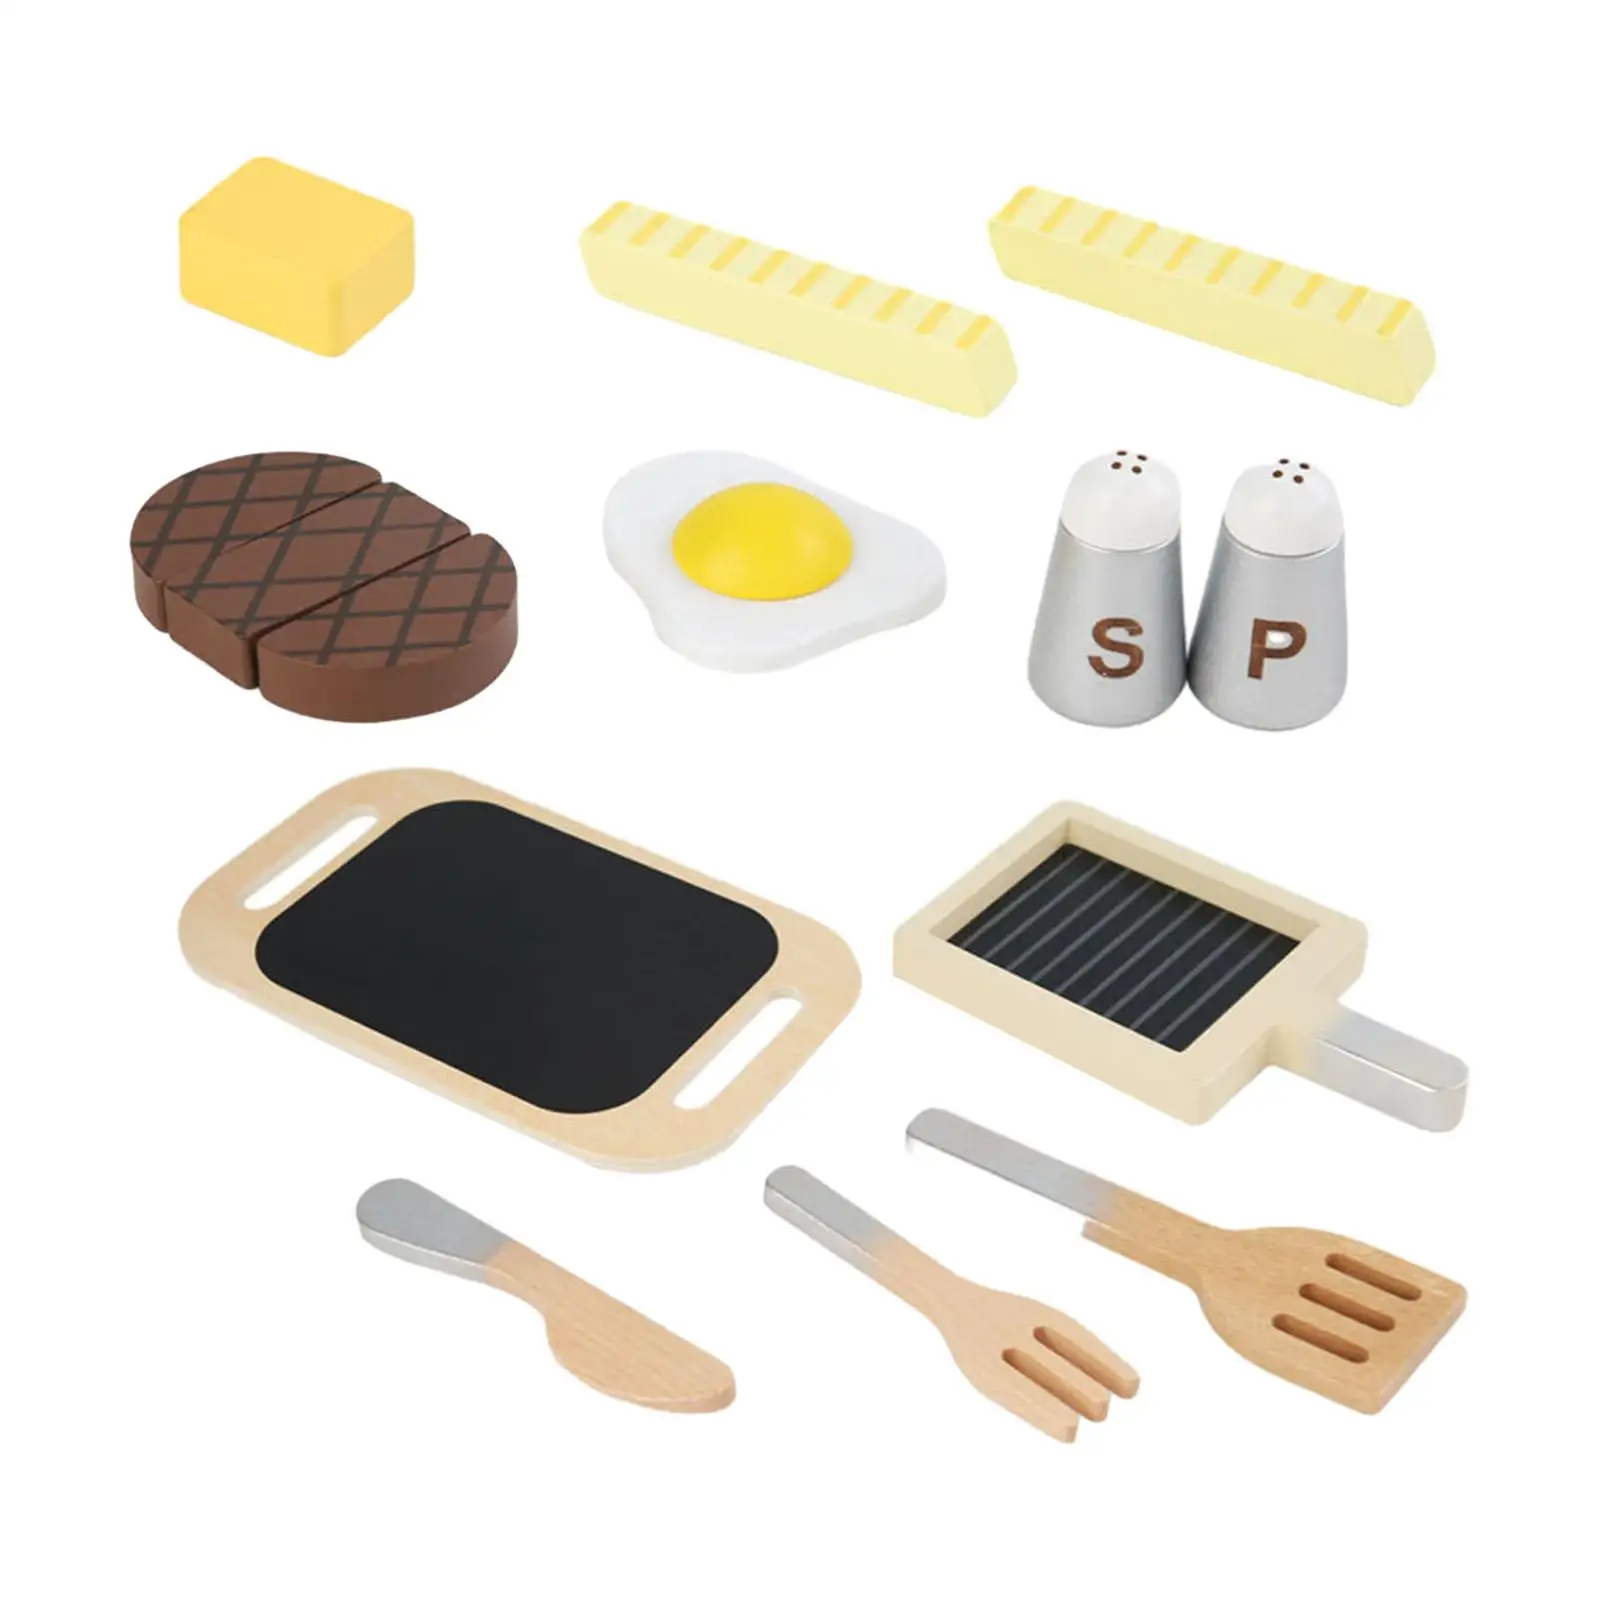 Wooden Play Kitchen Accessories Cookware Toy for Children Kids Birthday Gift